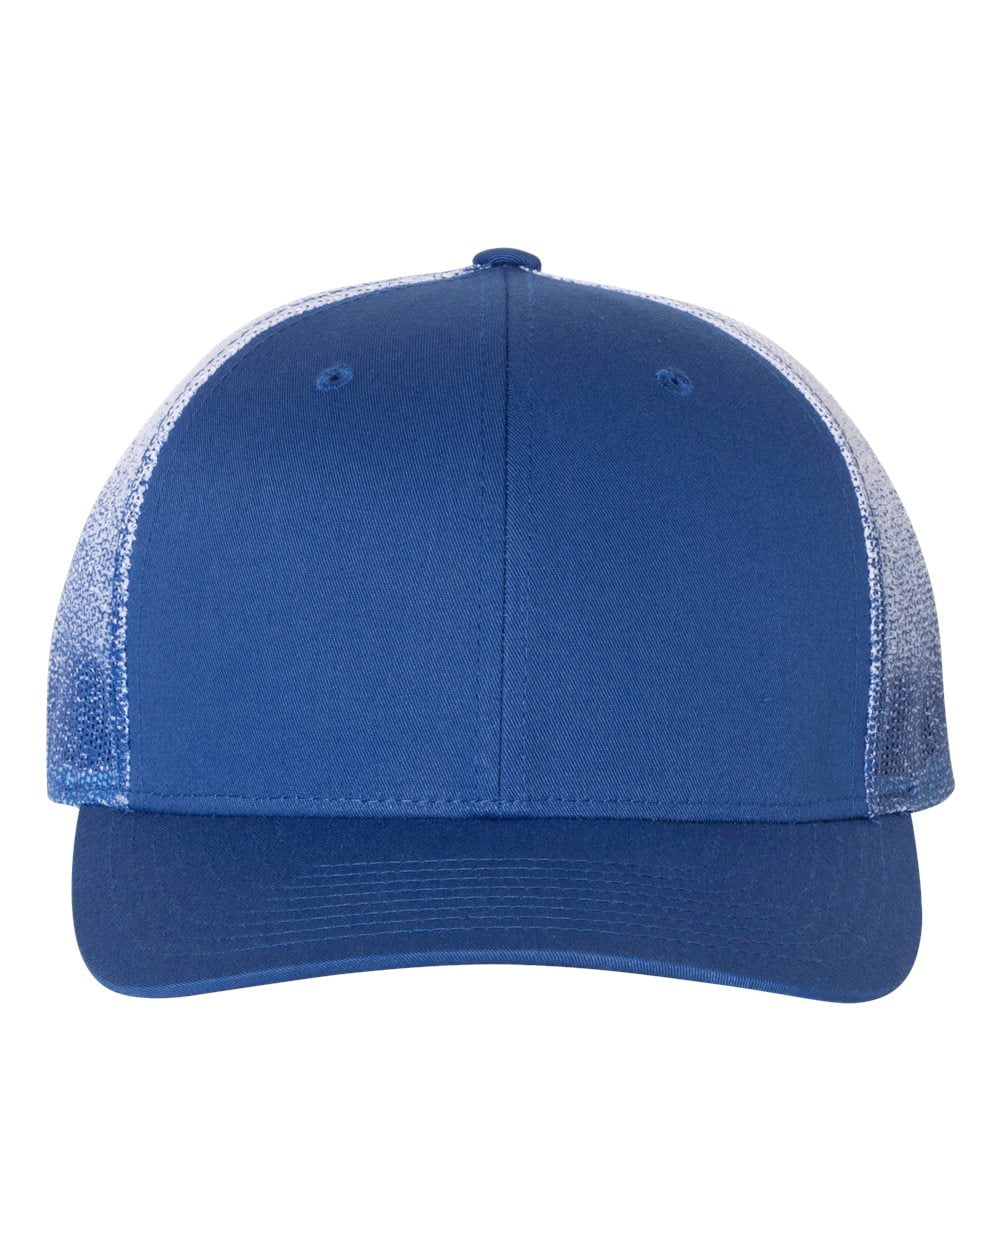 NEW NAVY BLUE CAP HAT 6 PANEL MESH MID PROFILE TRUCKER SNAPBACK STRUCTURED